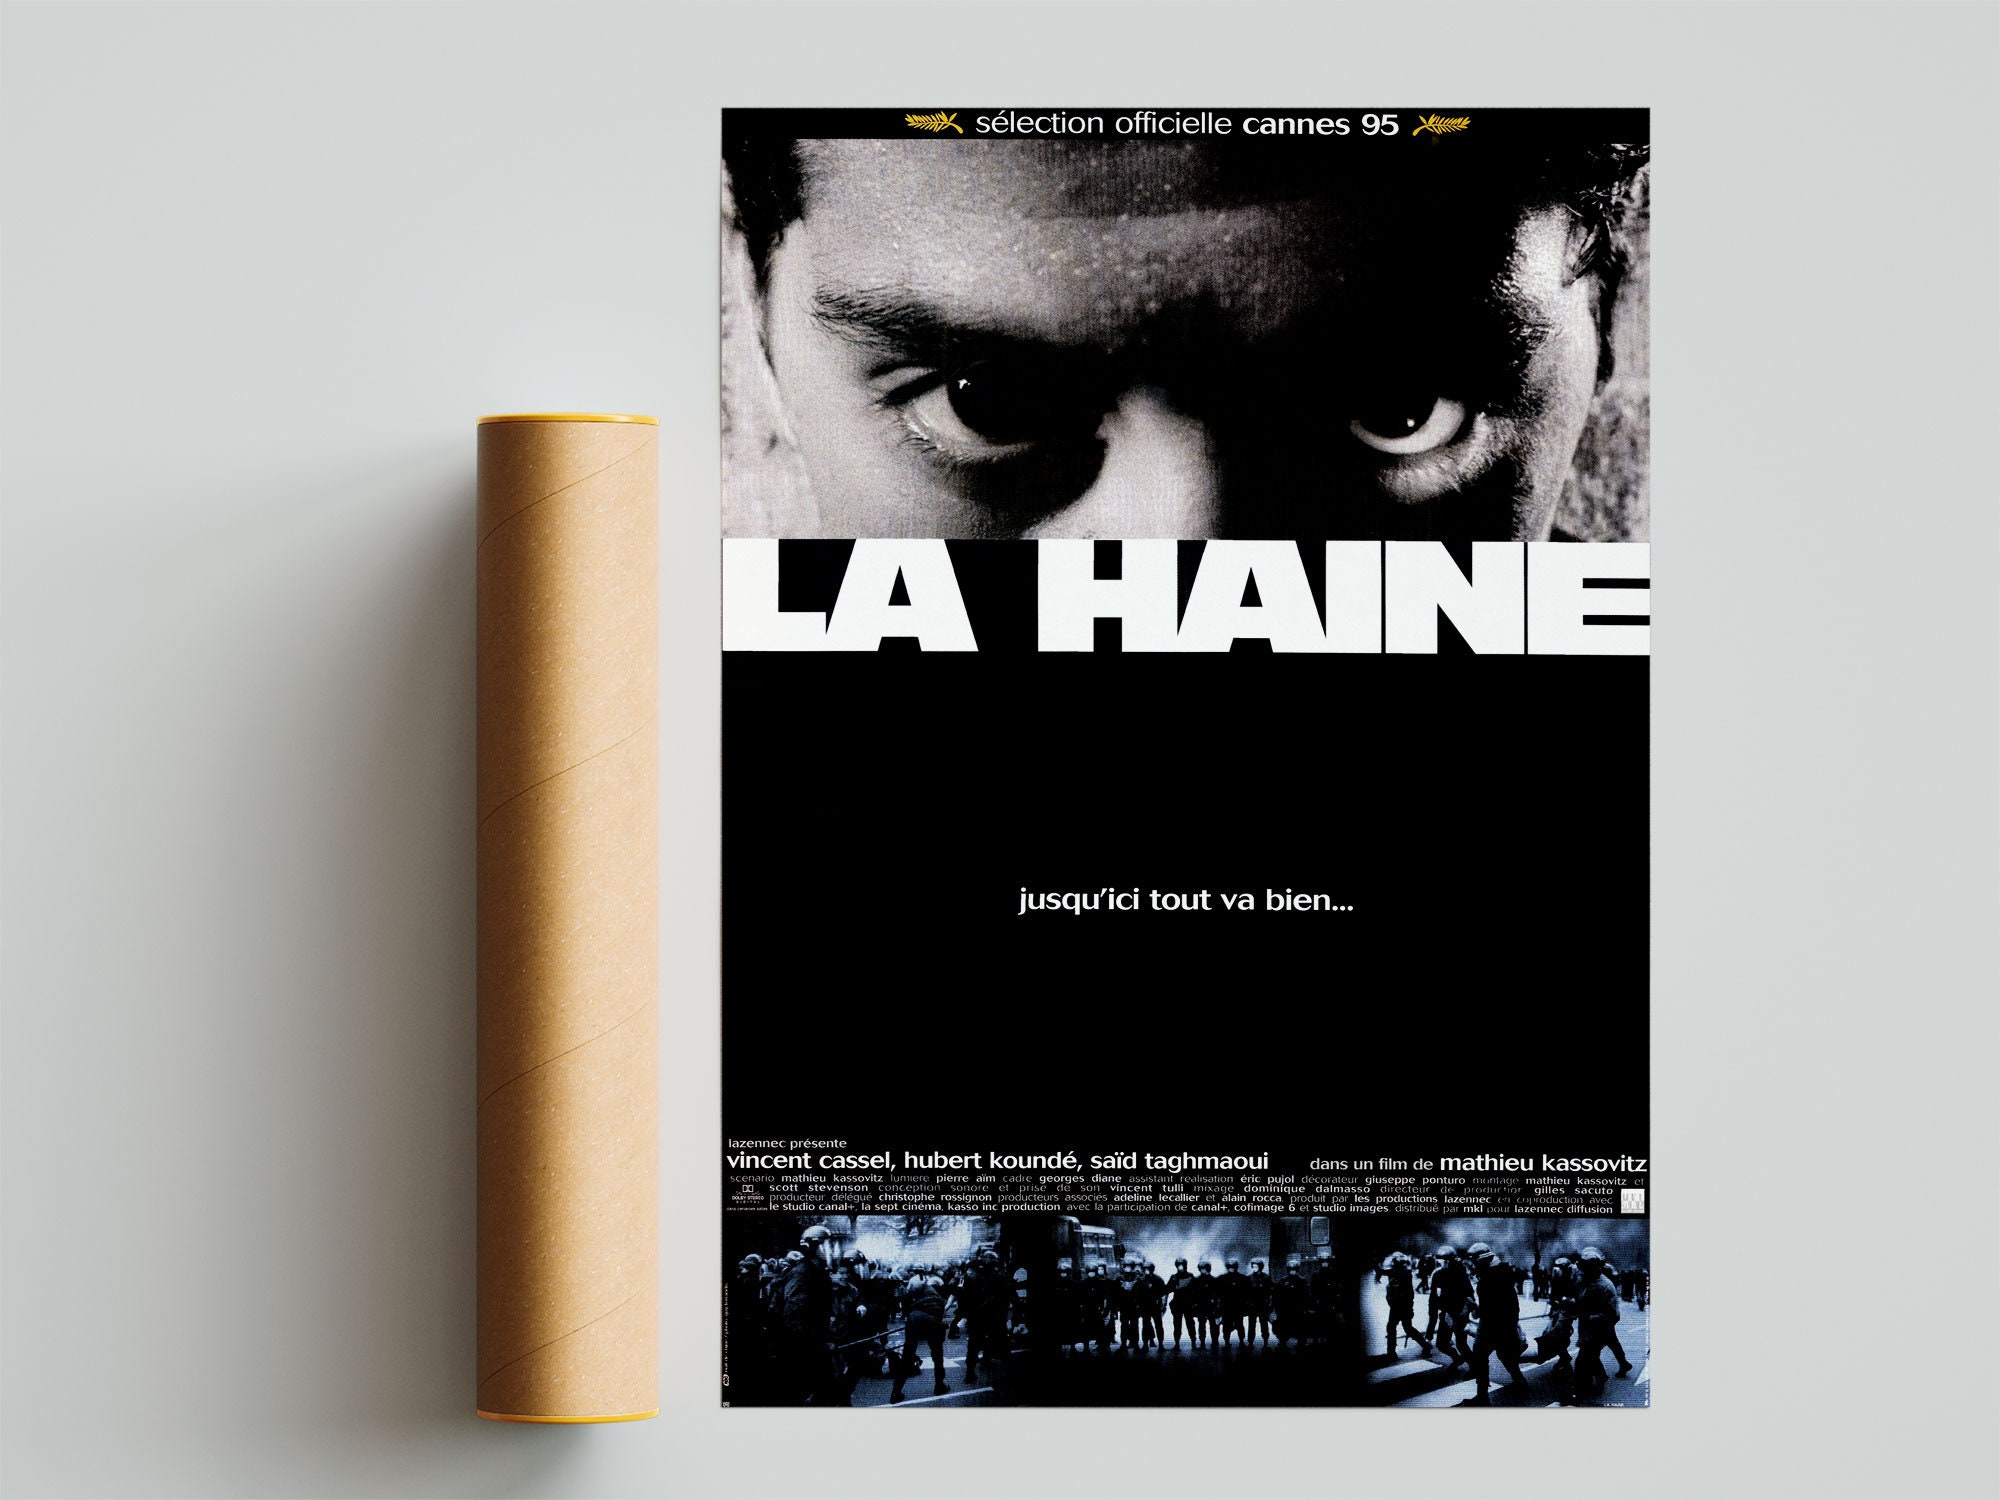 LA HATE Original Cinema Poster ROULEE 53x40 Movie Poster Mathieu Kassovitz